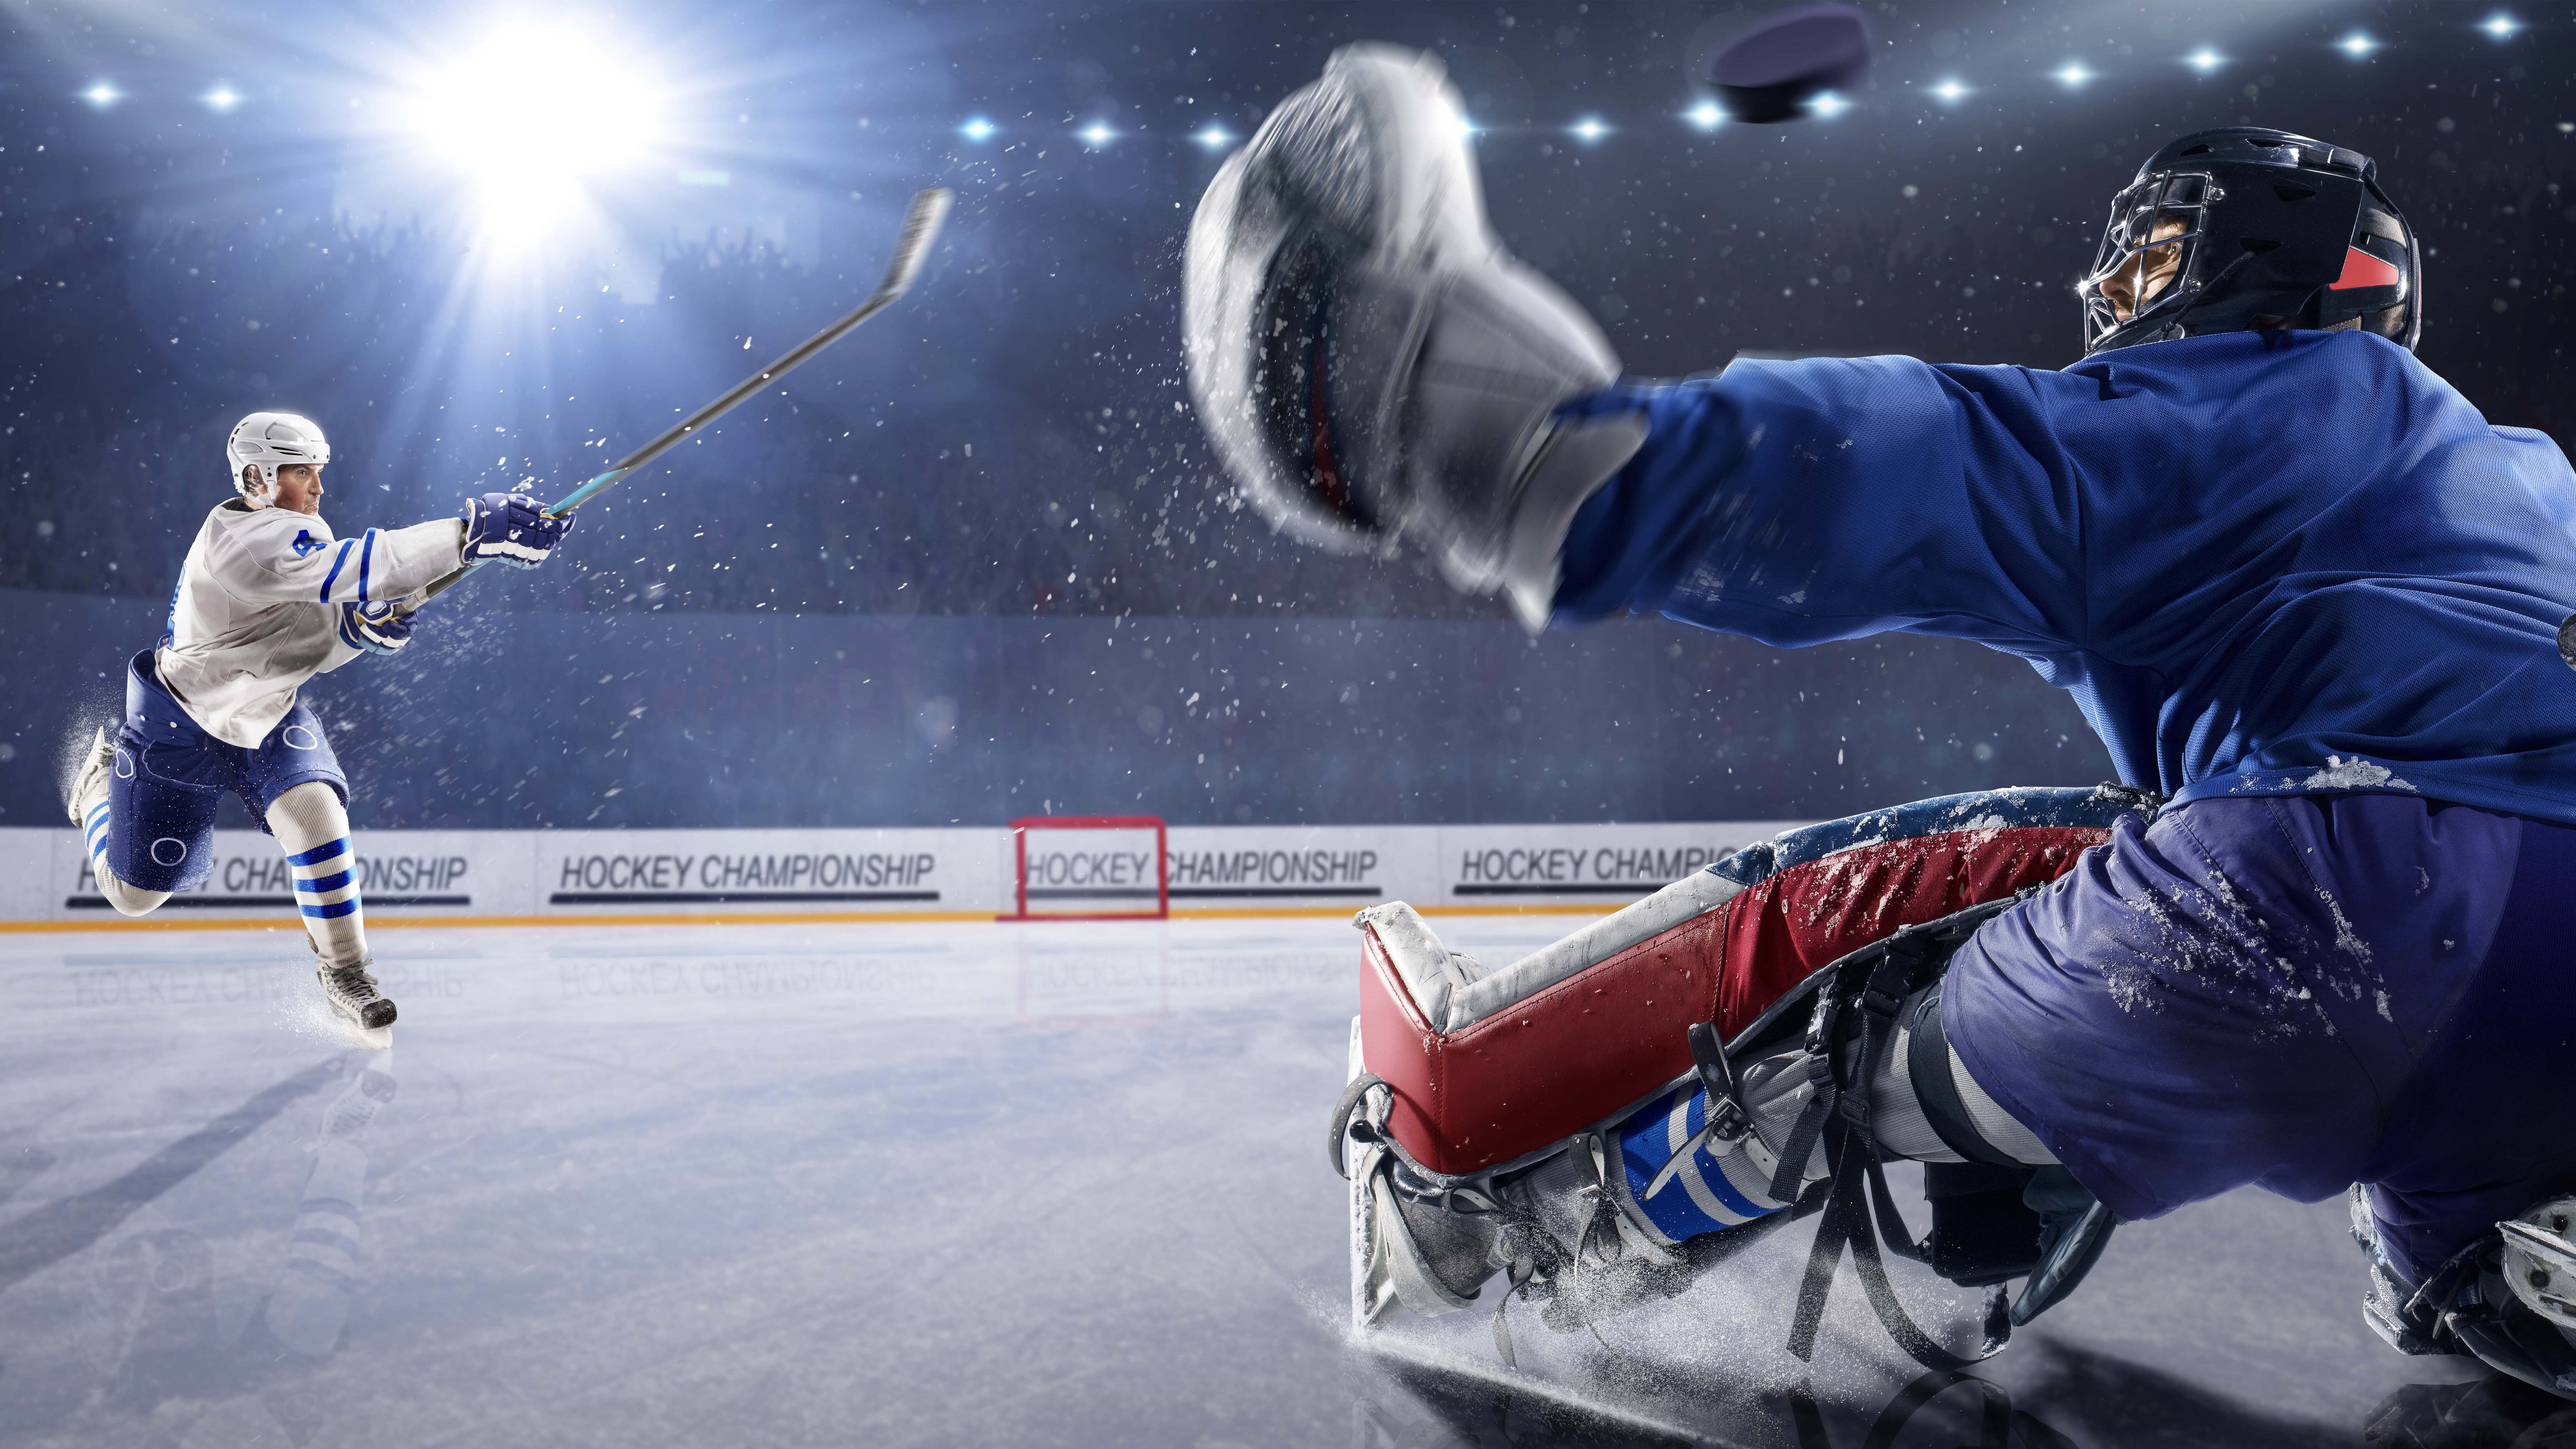 puck wallpaper,ice hockey equipment,bandy,ice hockey,sports,stick and ball games